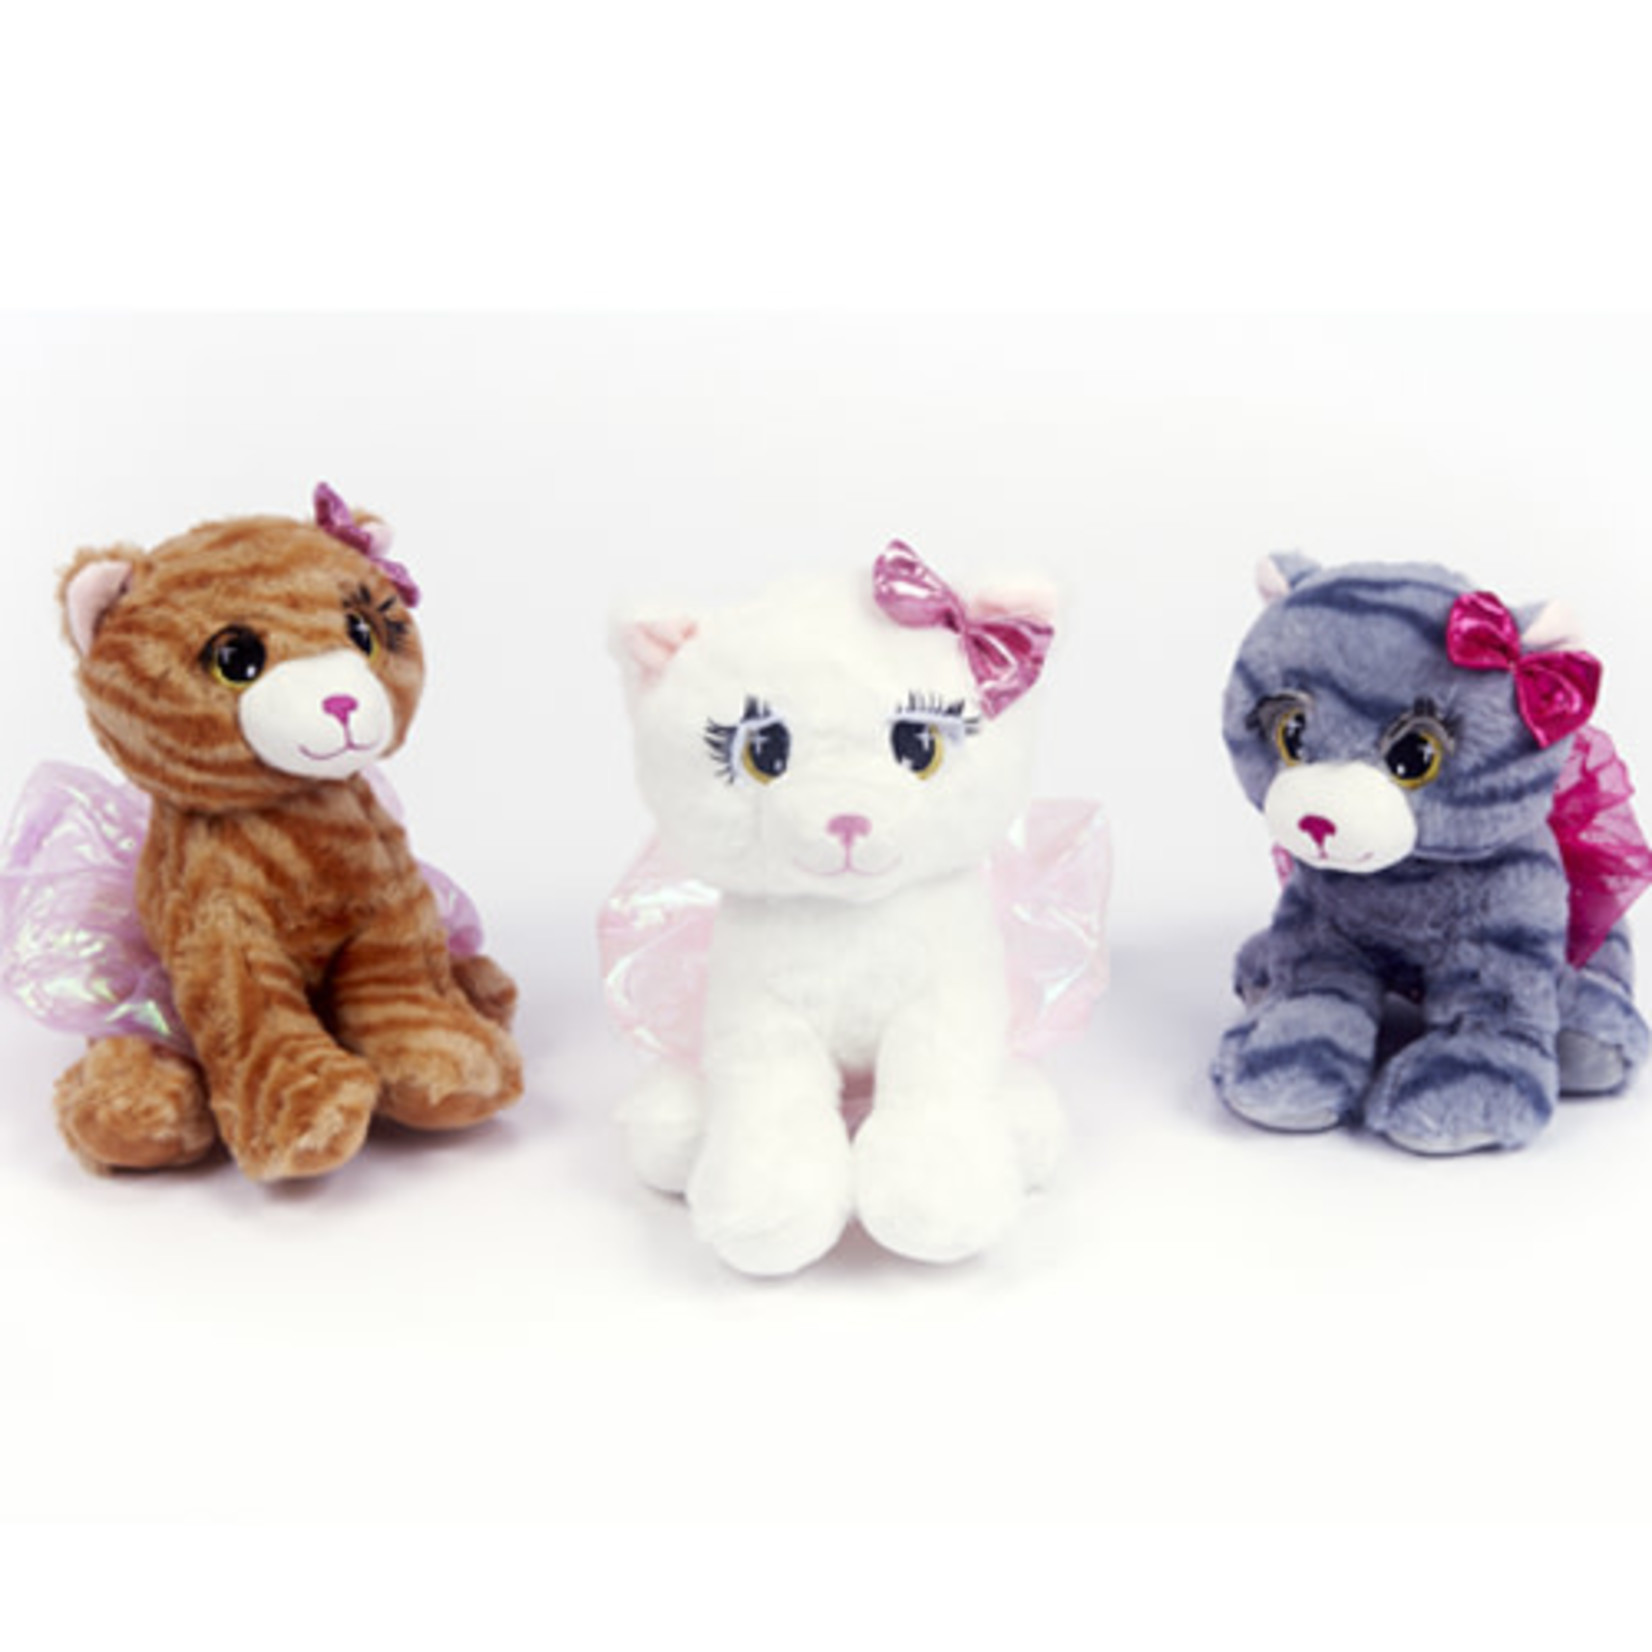 Dasha Dasha 6322 Cuddly Kitty 9" Stuffed Animal